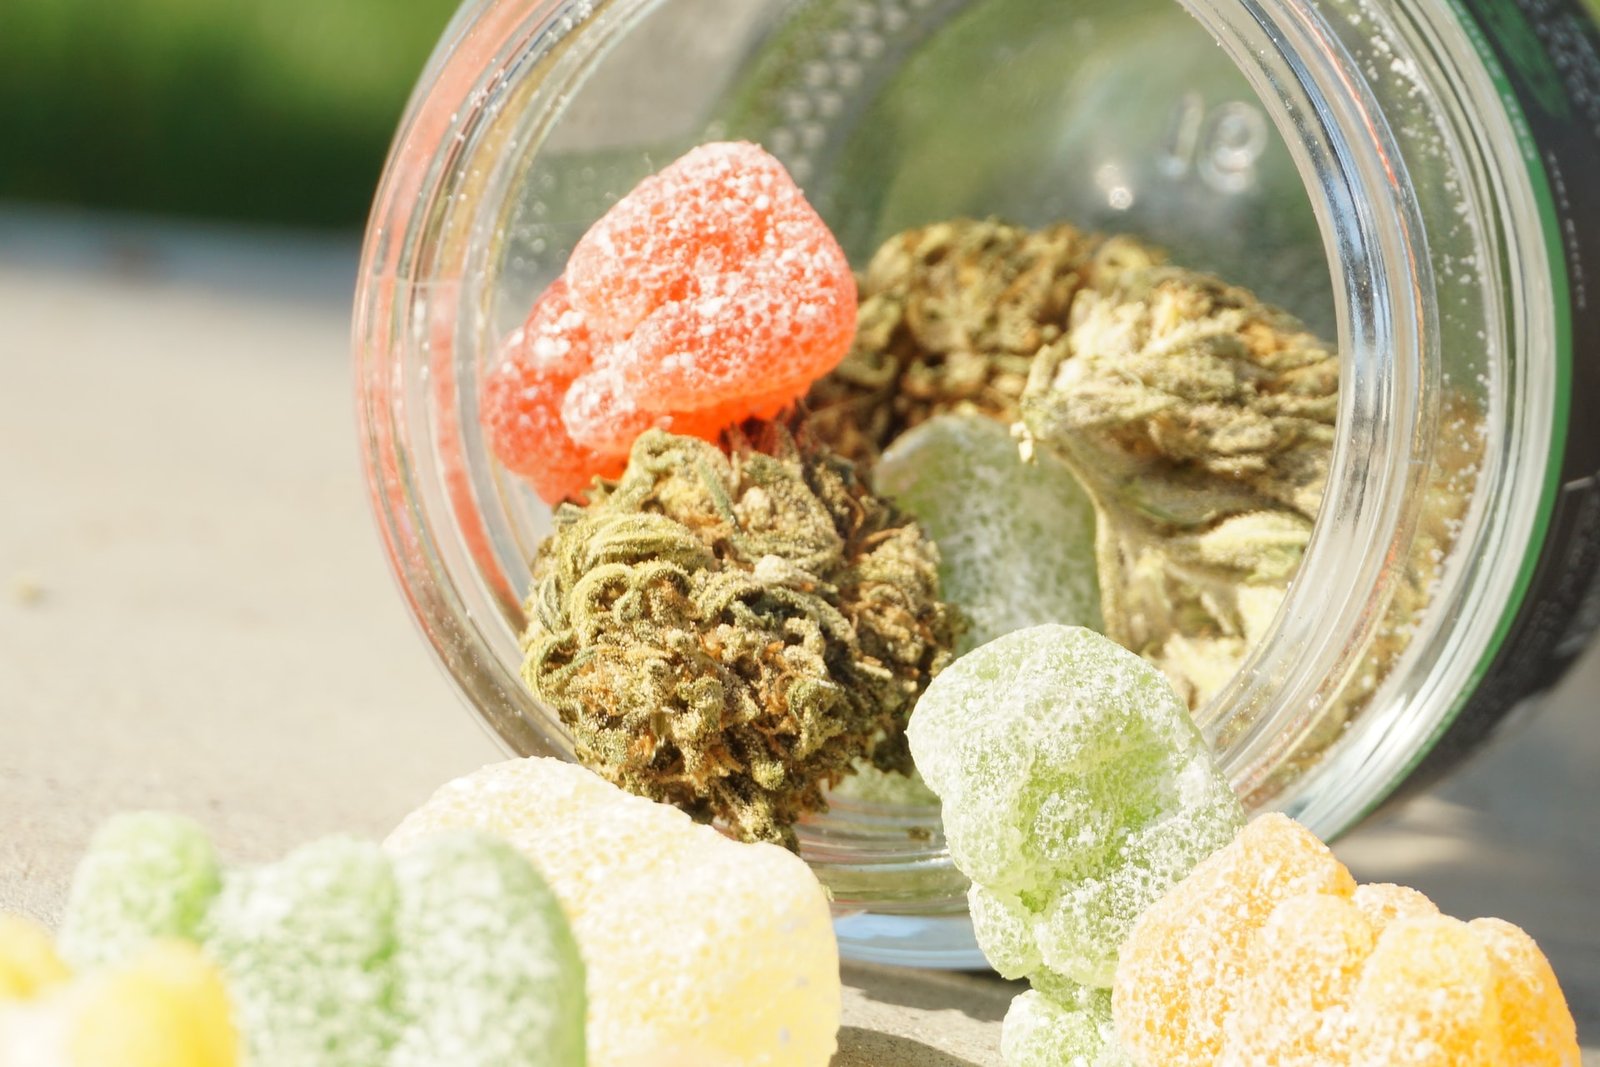 gummies and cannabis flowers